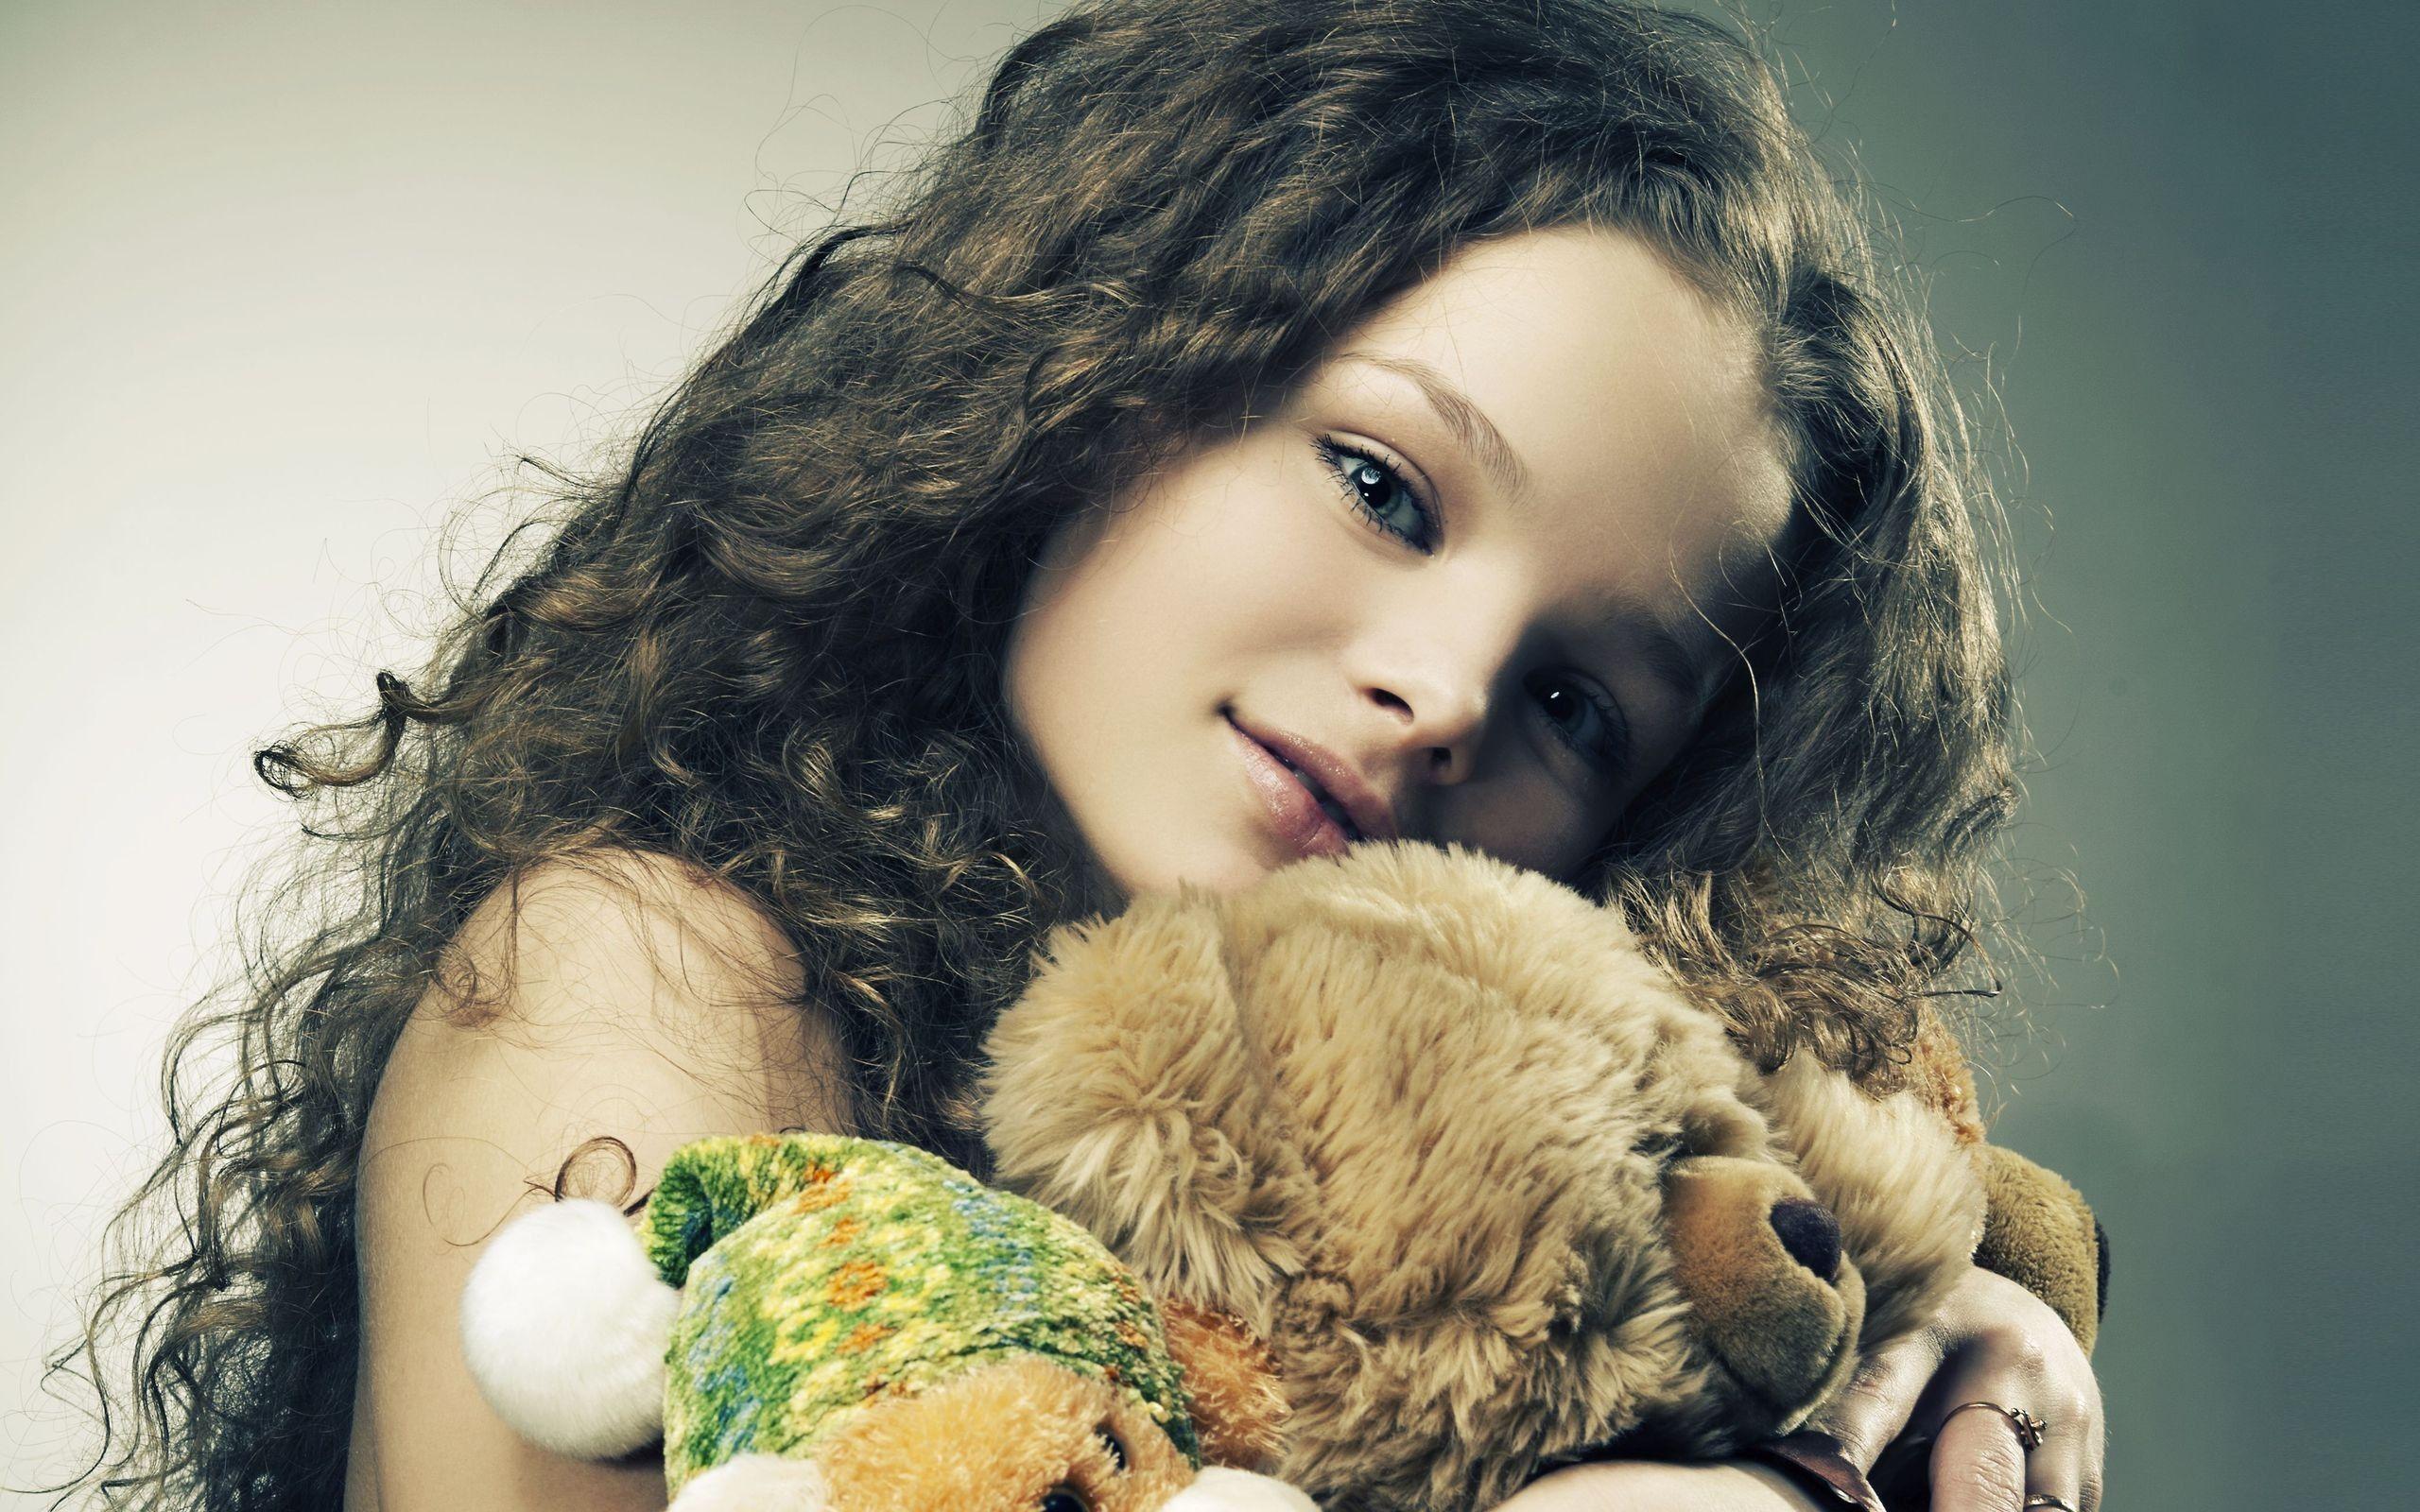 Cute Little Girl Hugging Teddy Bear widescreen wallpaper. Wide